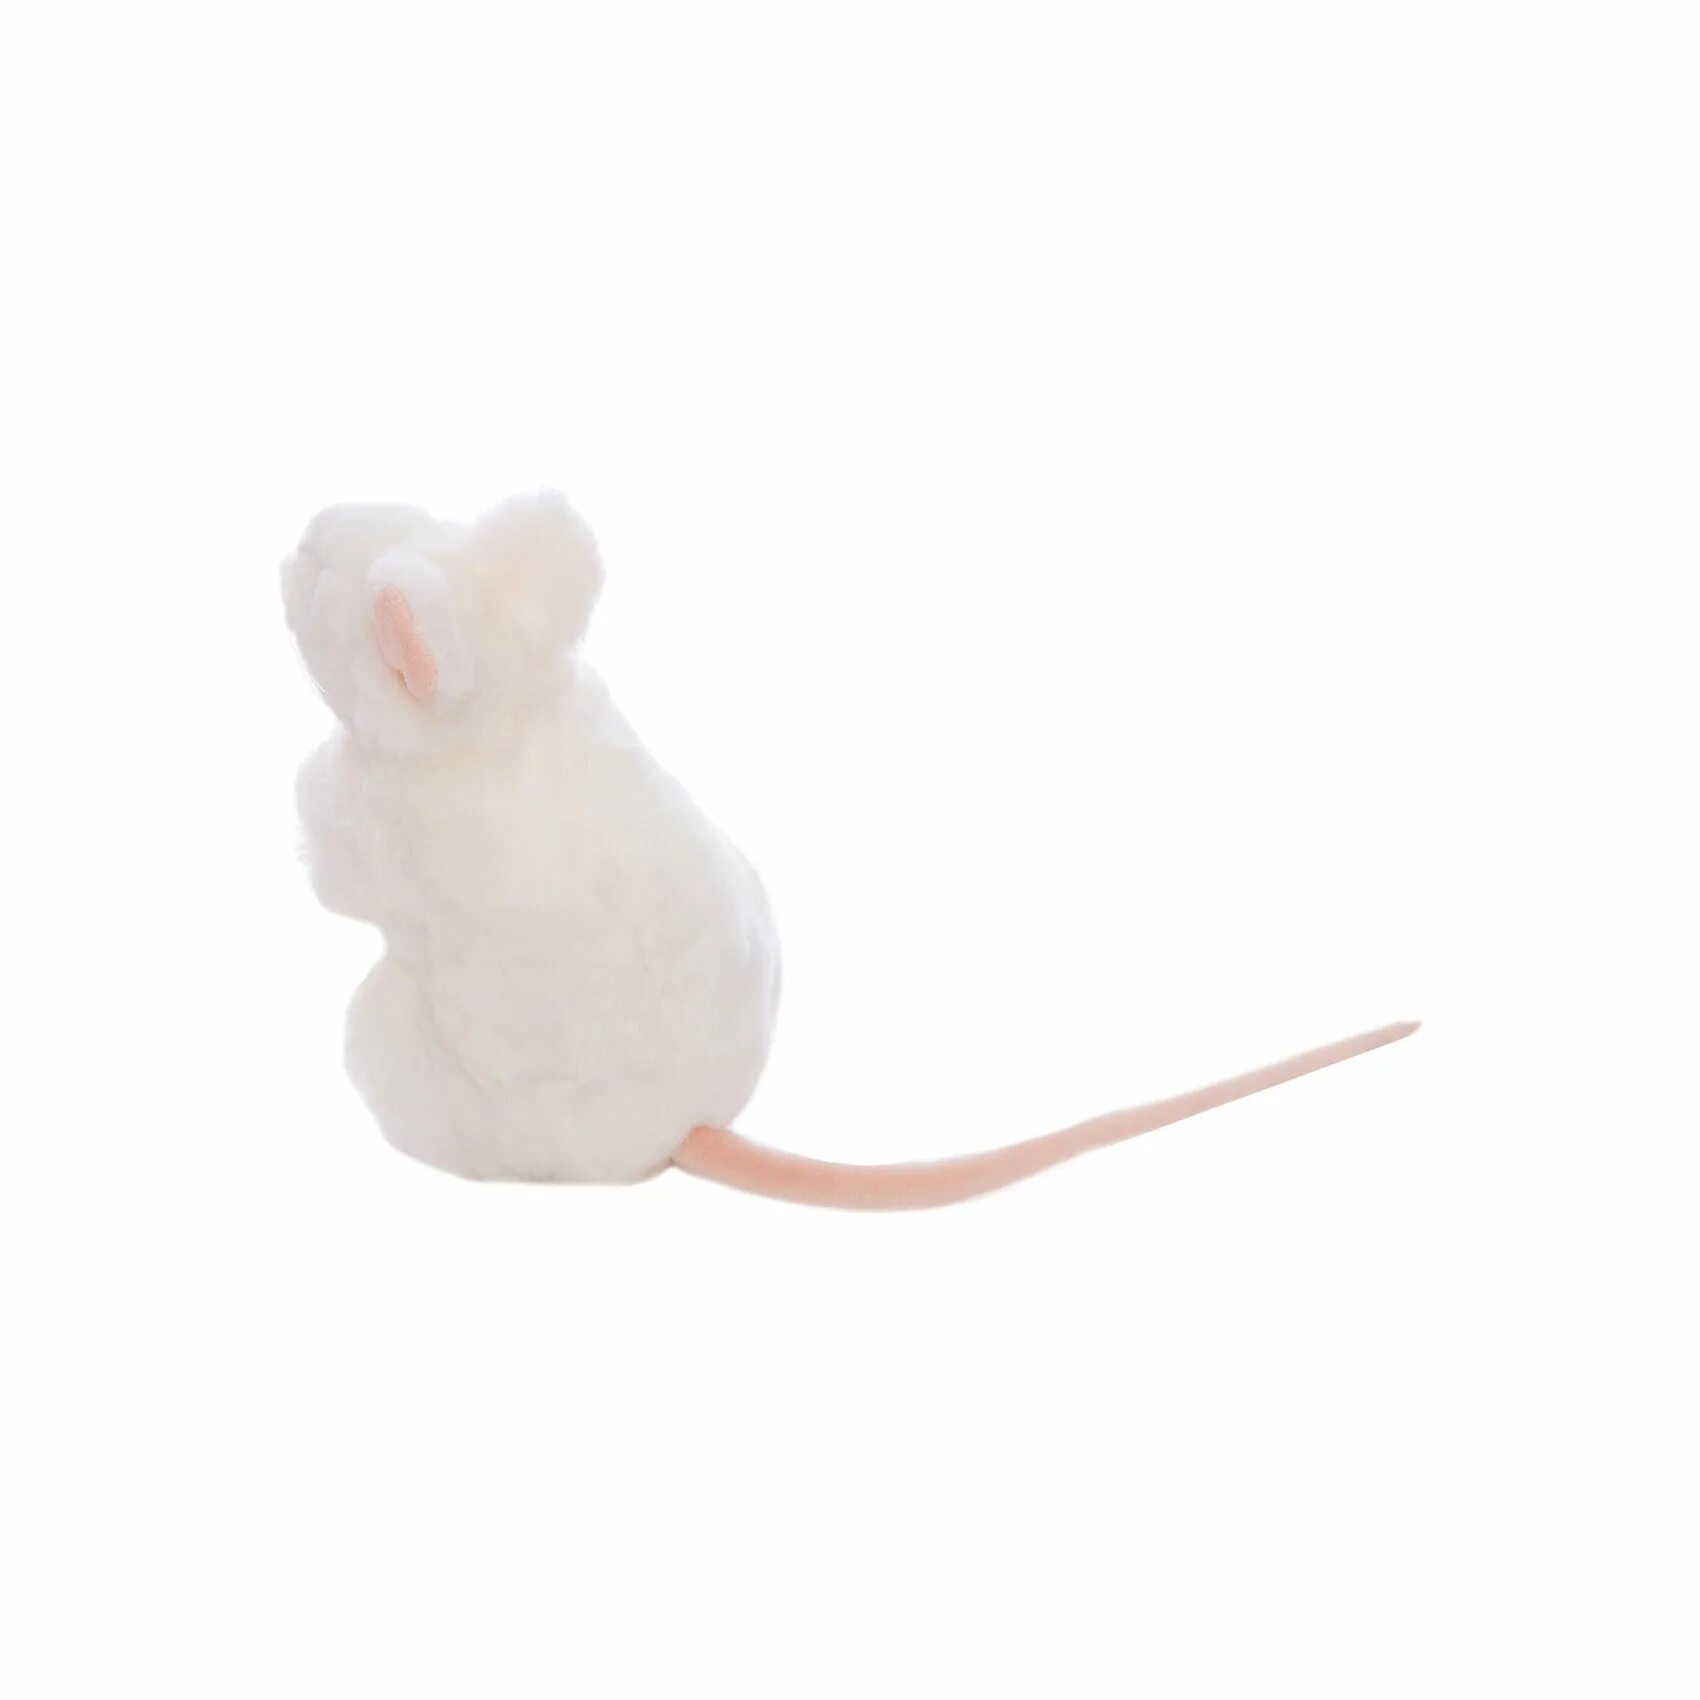 Белая мышь 16 см Hansa. Hansa мышь 16 см. Белая мышь игрушка Ханса. Игрушки Hansa мышь белая.